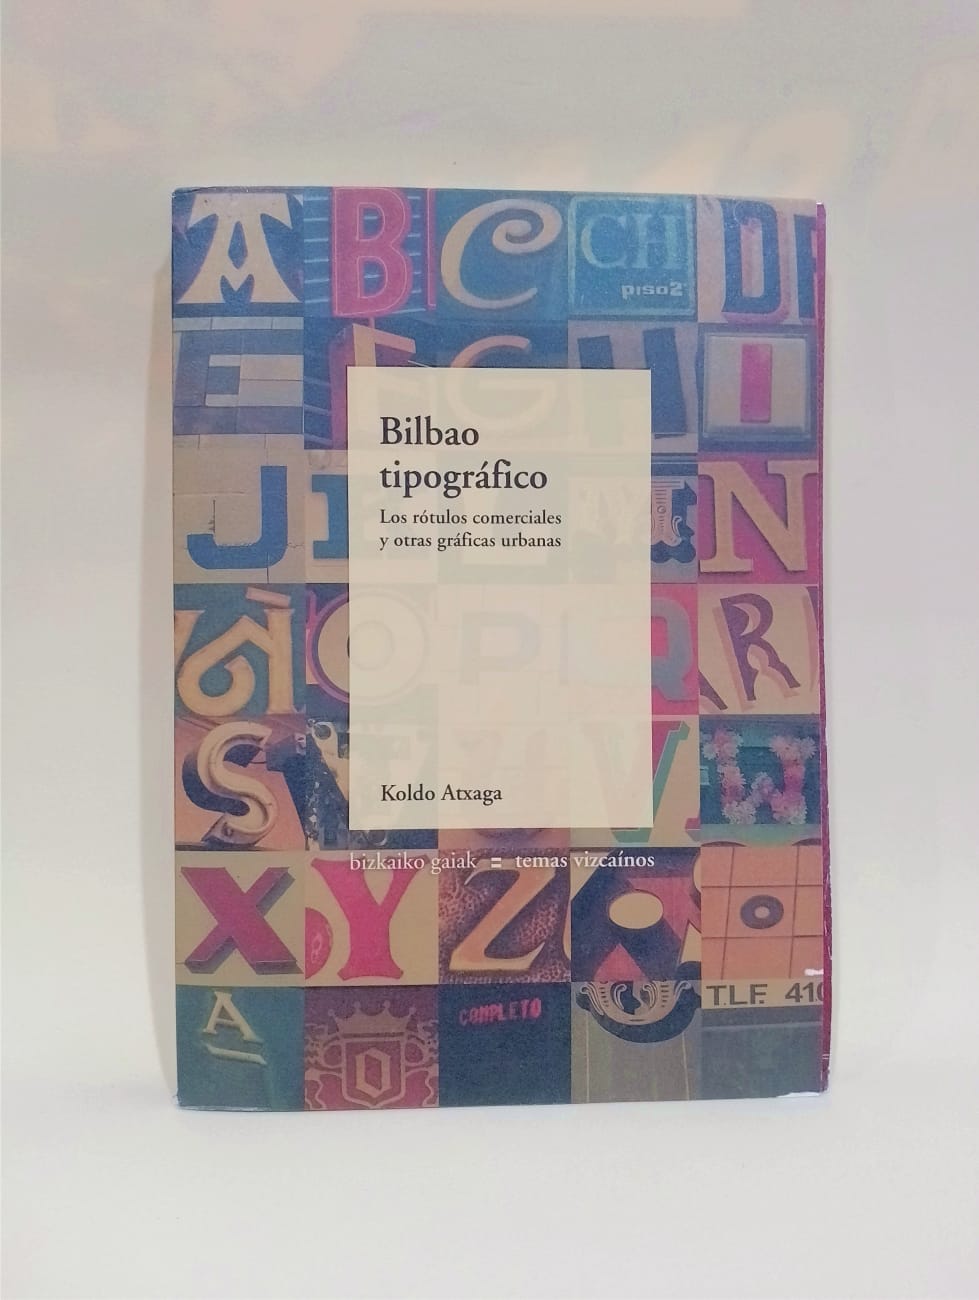 Bilbao Tipografico libro